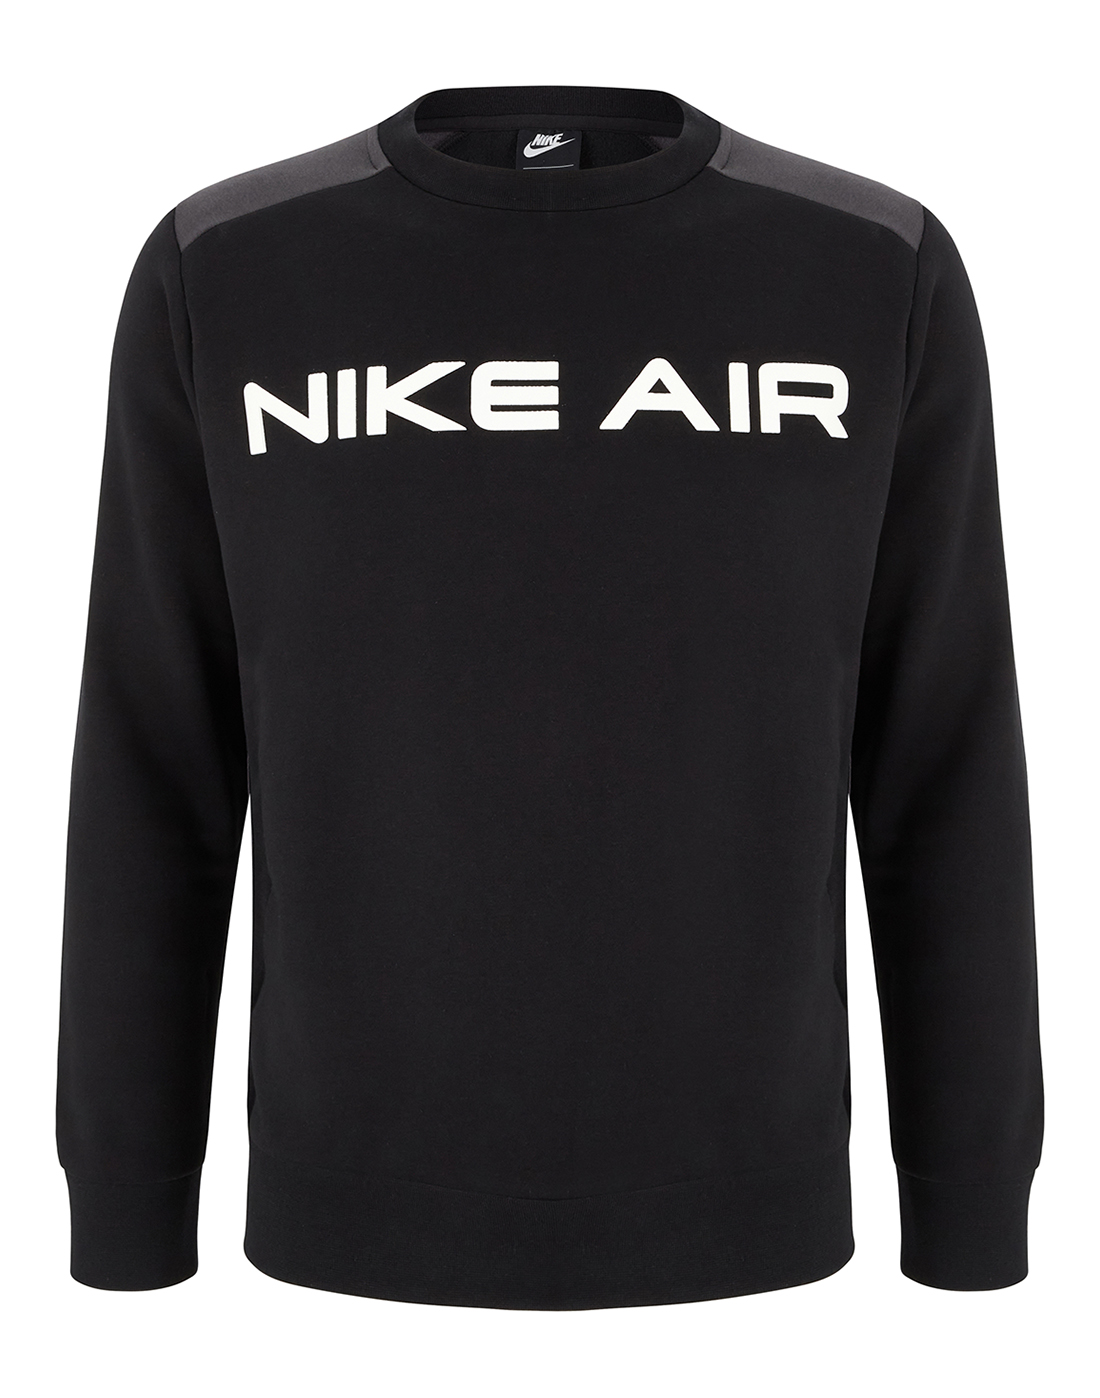 Nike Mens Nike Air Crew Neck Sweatshirt - Black | Life Style Sports EU